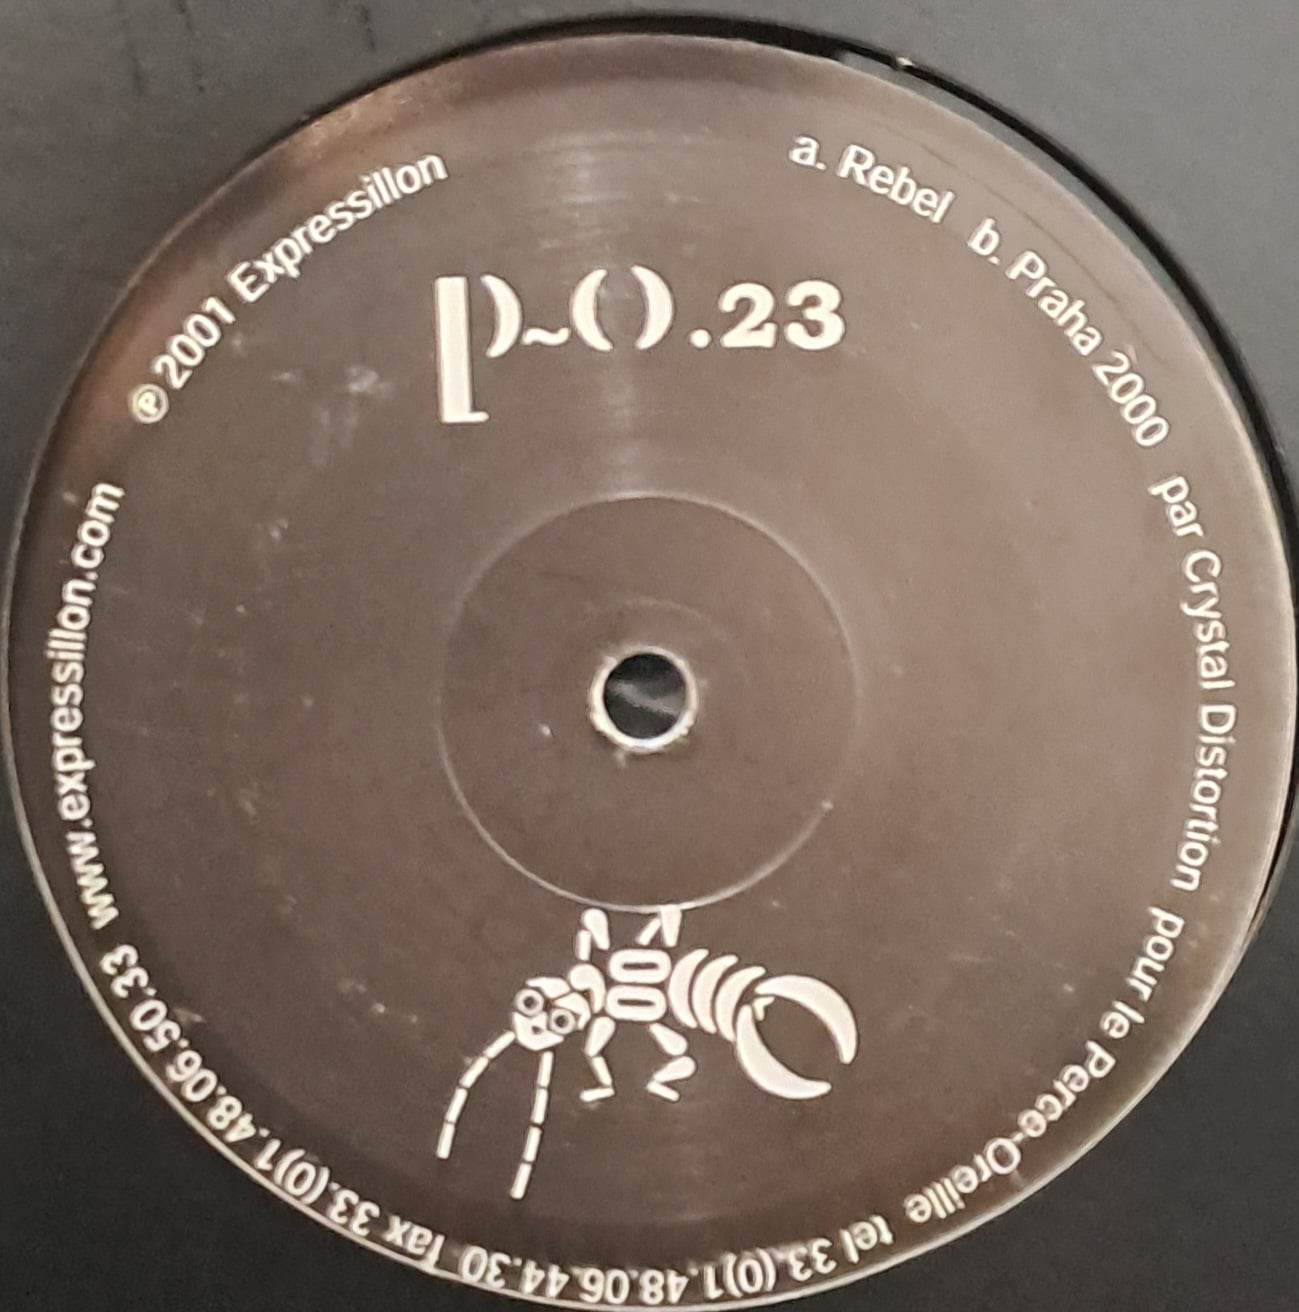 Perce~Oreille 23 - vinyle Breakbeat
